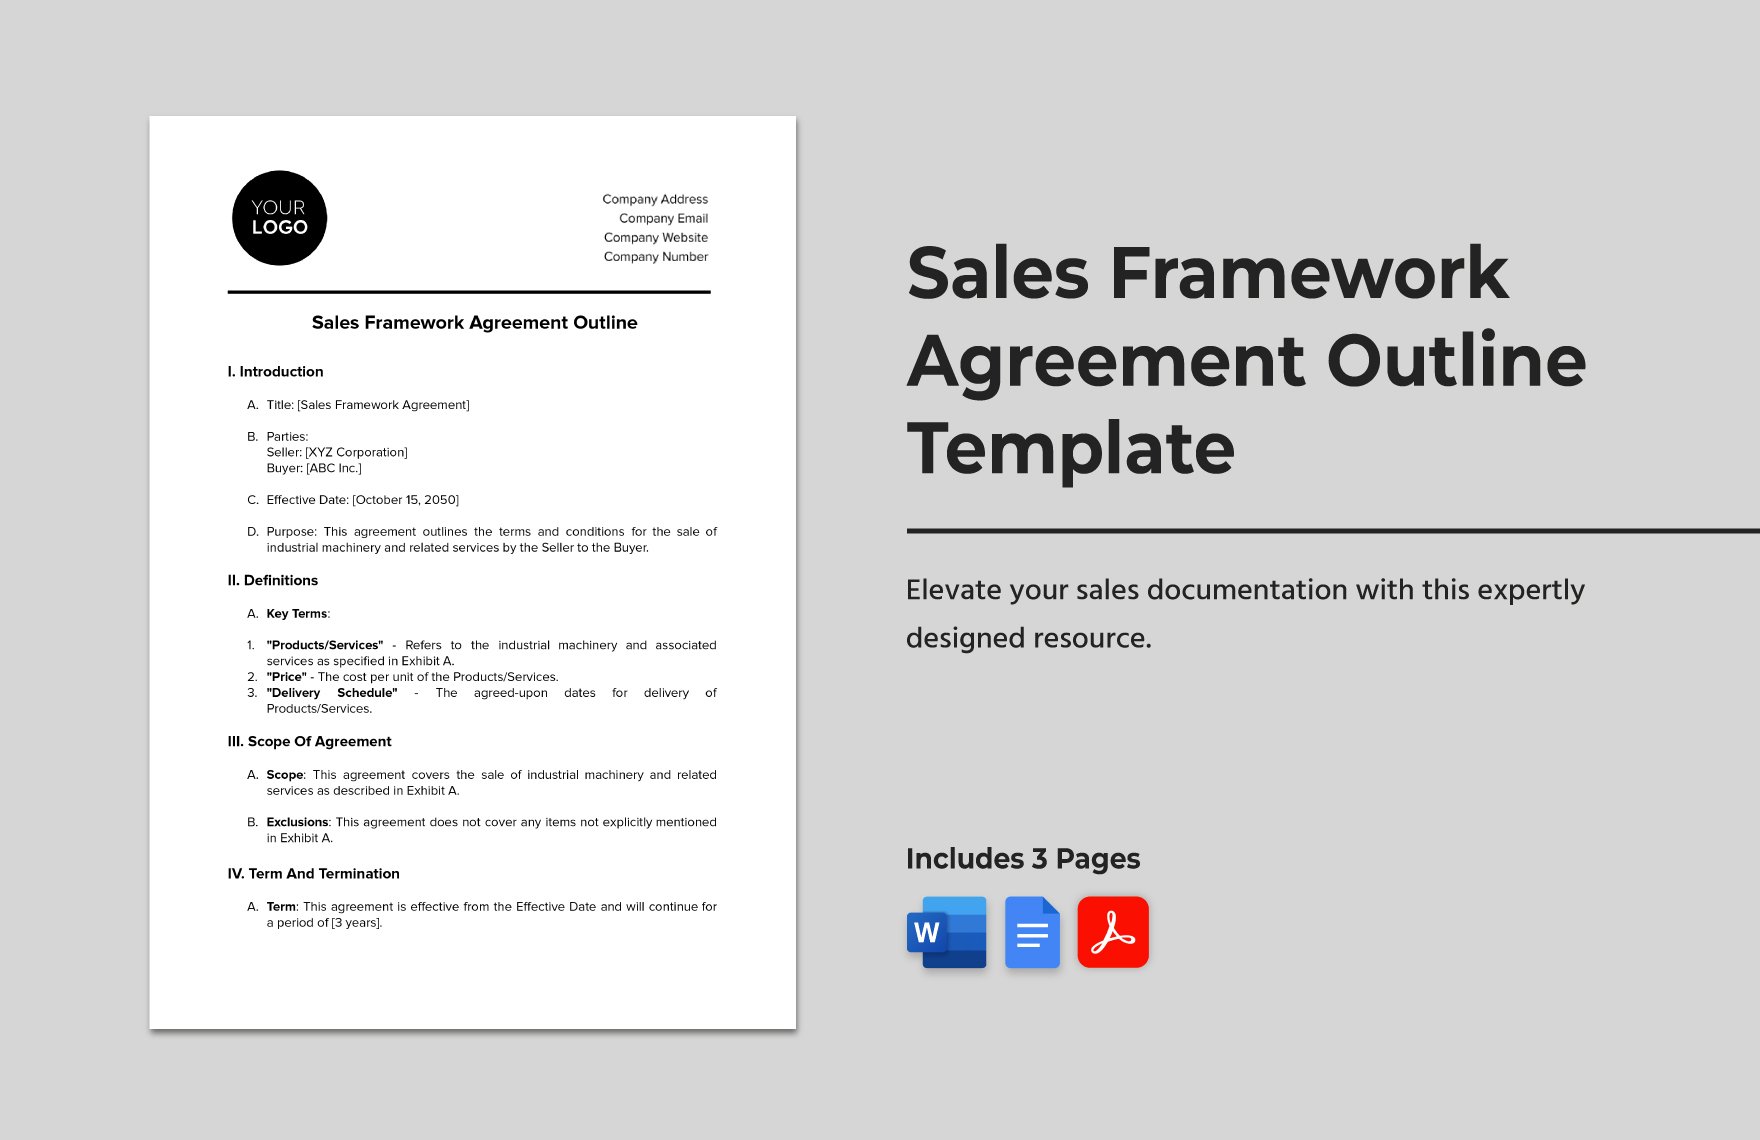 Sales Framework Agreement Outline Template in Word, Google Docs, PDF